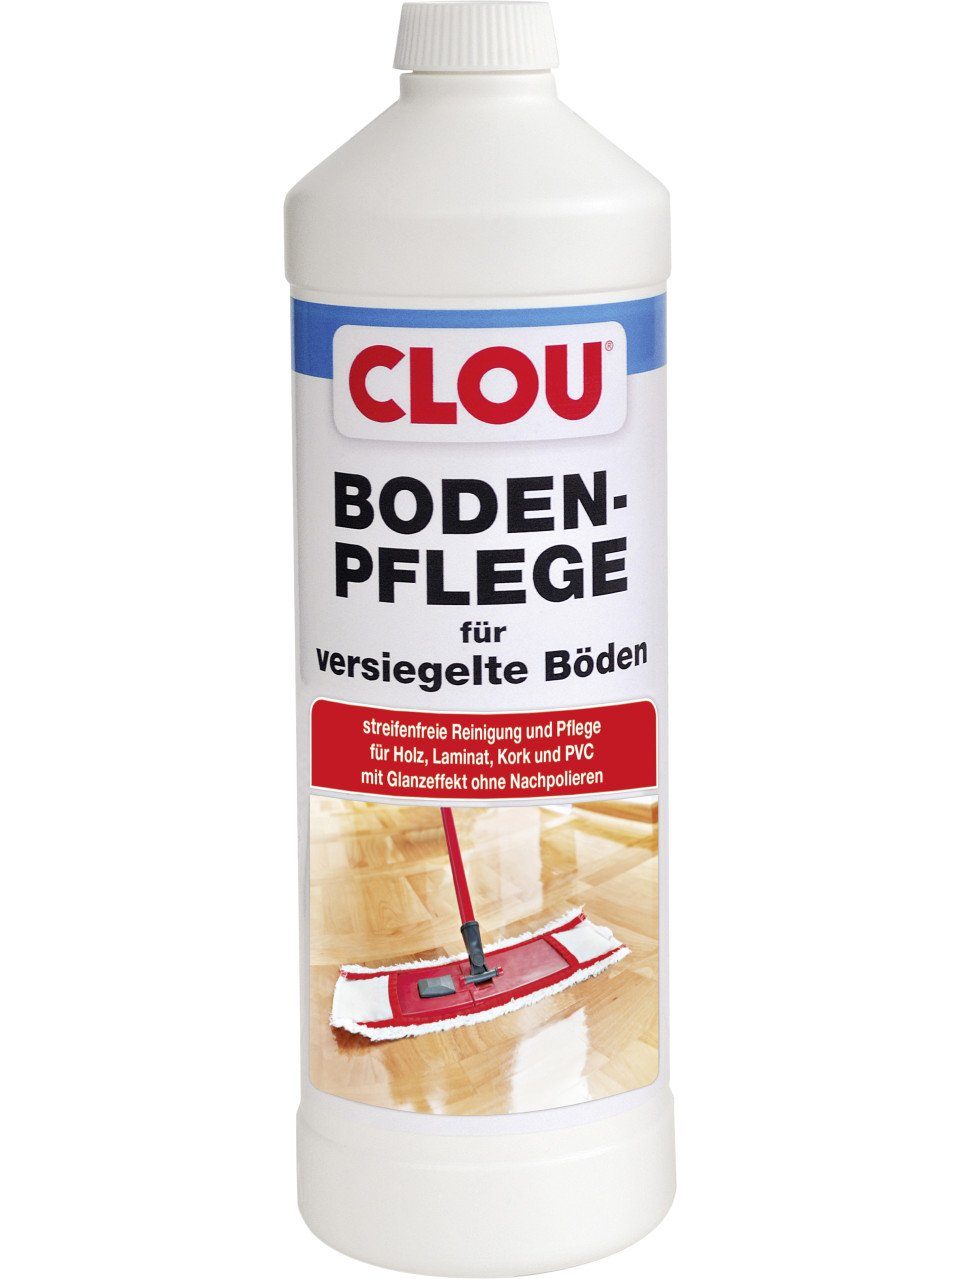 Holzpflegeöl Bodenpflege CLOU 1 versiegelte für Clou Böden L